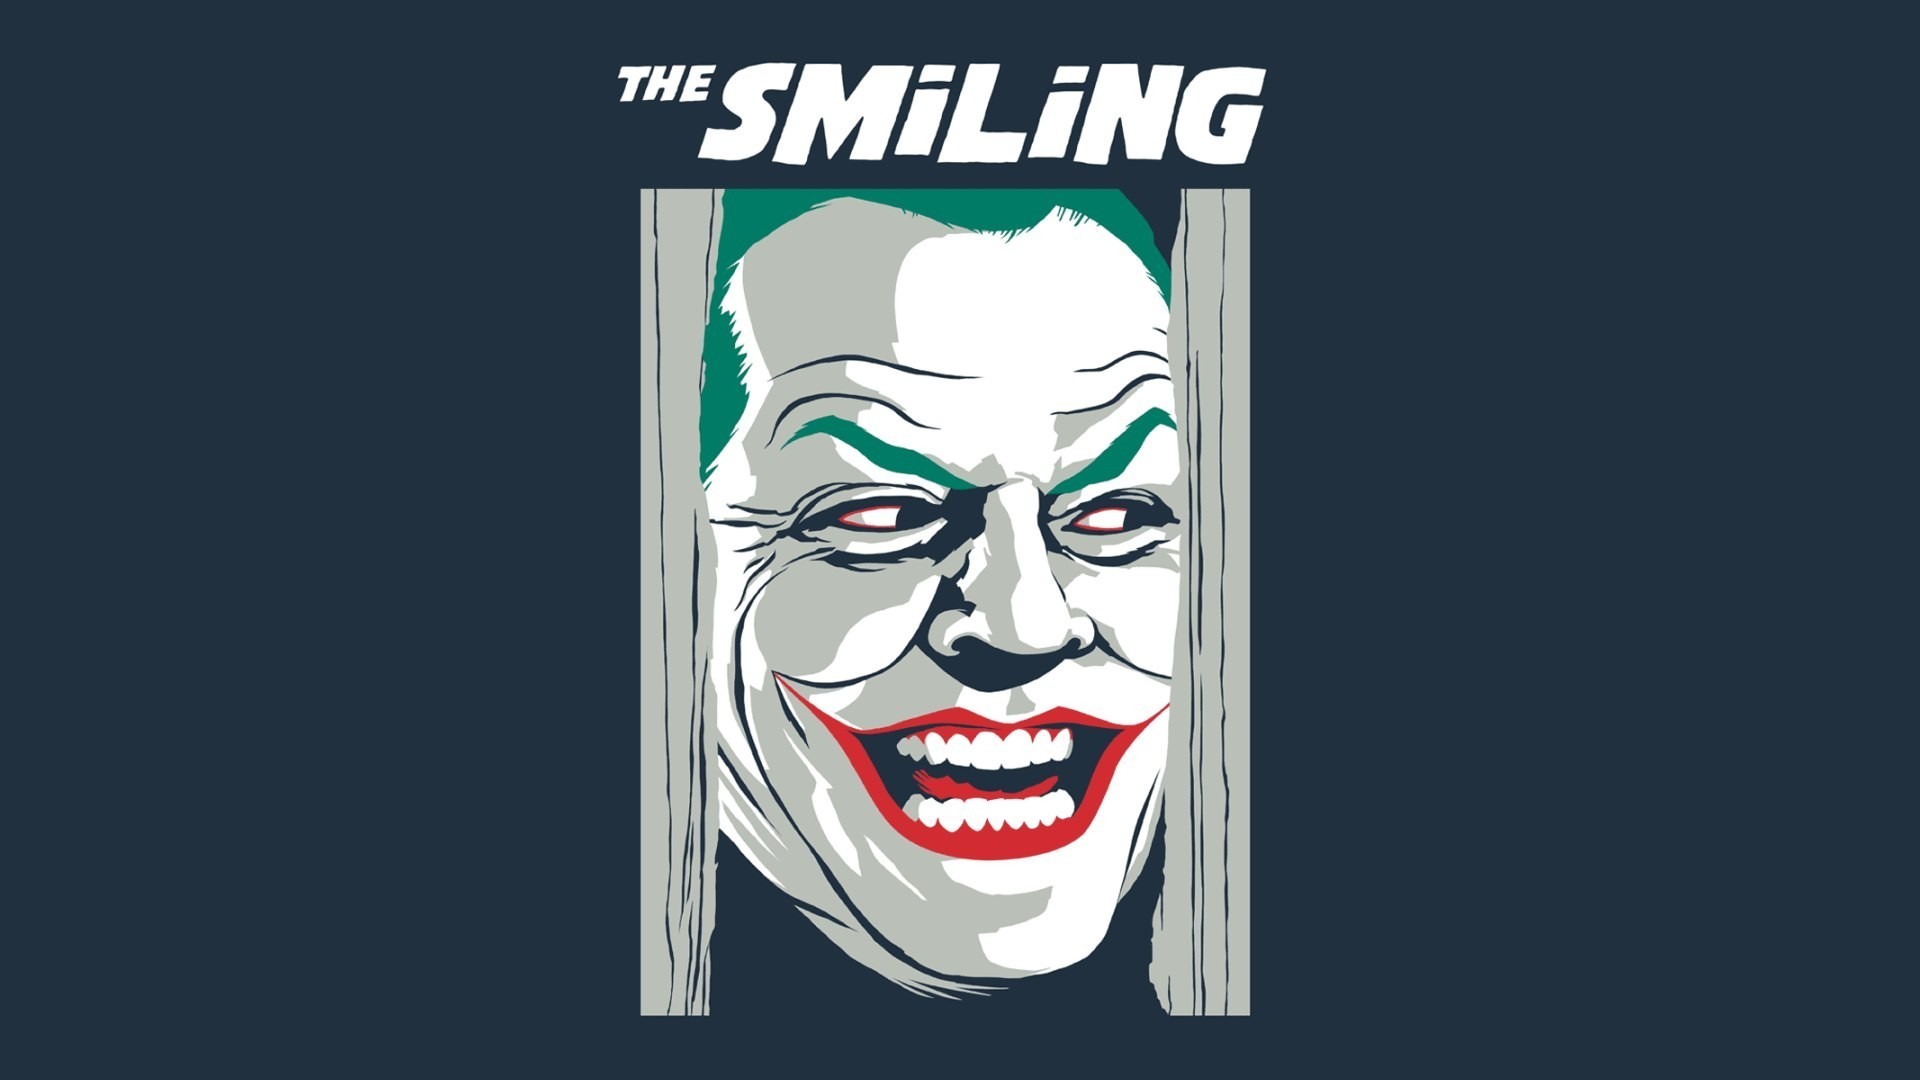 face, Joker, Jack Nicholson, Digital art, Movies, The Shining, Batman, Smiling, Crossover, Humor, Blue background, Stanley Kubrick Wallpaper